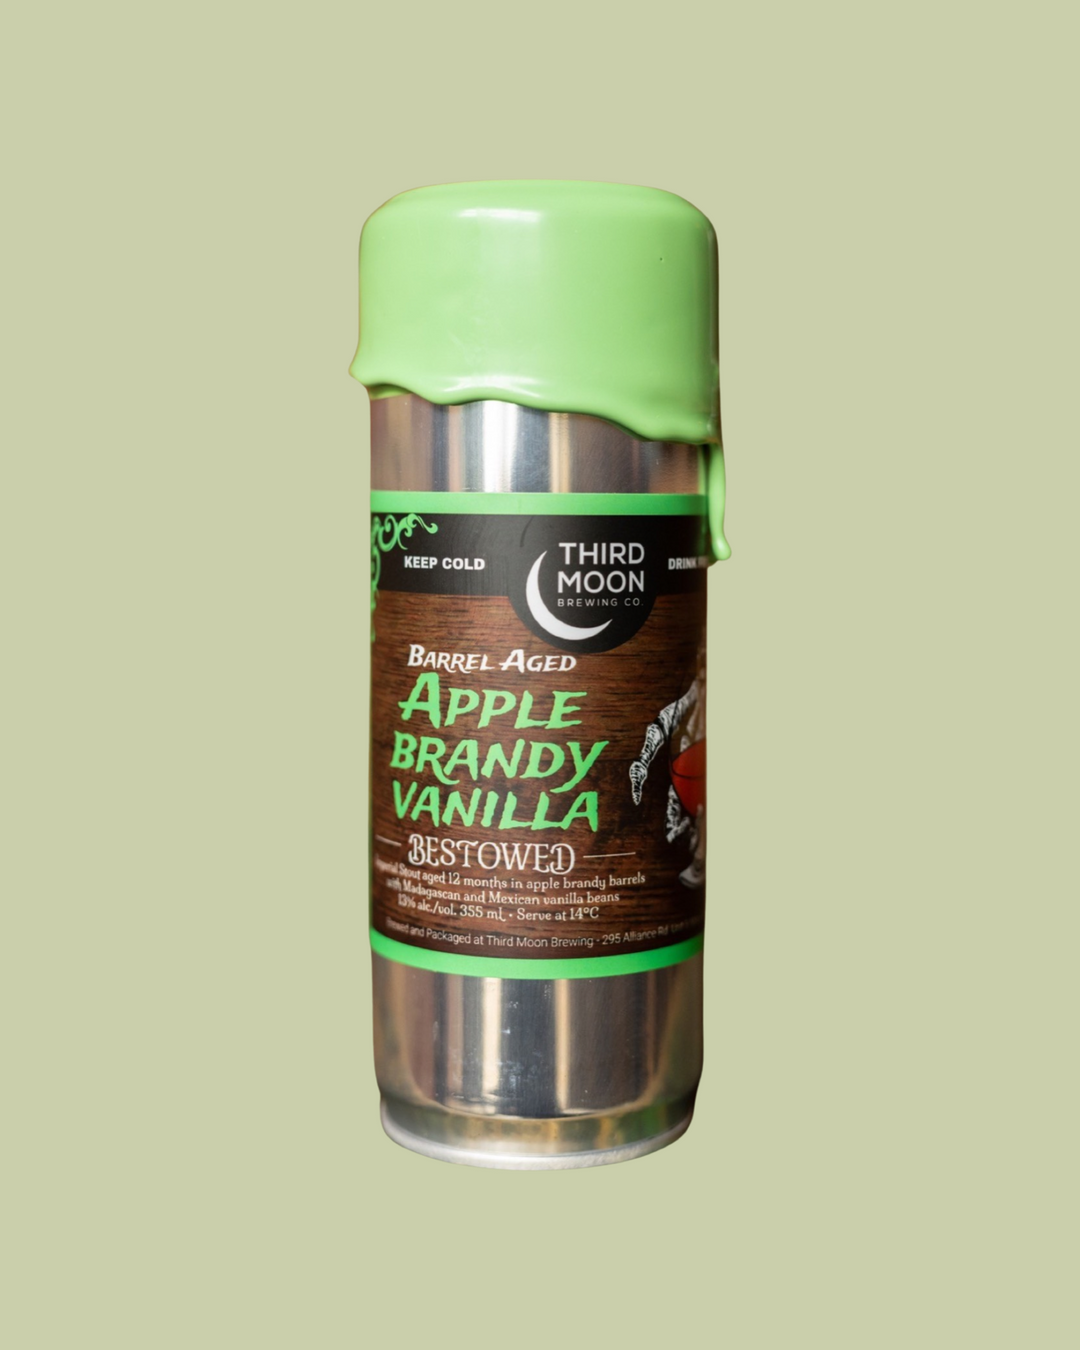 Barrel Aged Apple Brandy Vanilla Bestowed